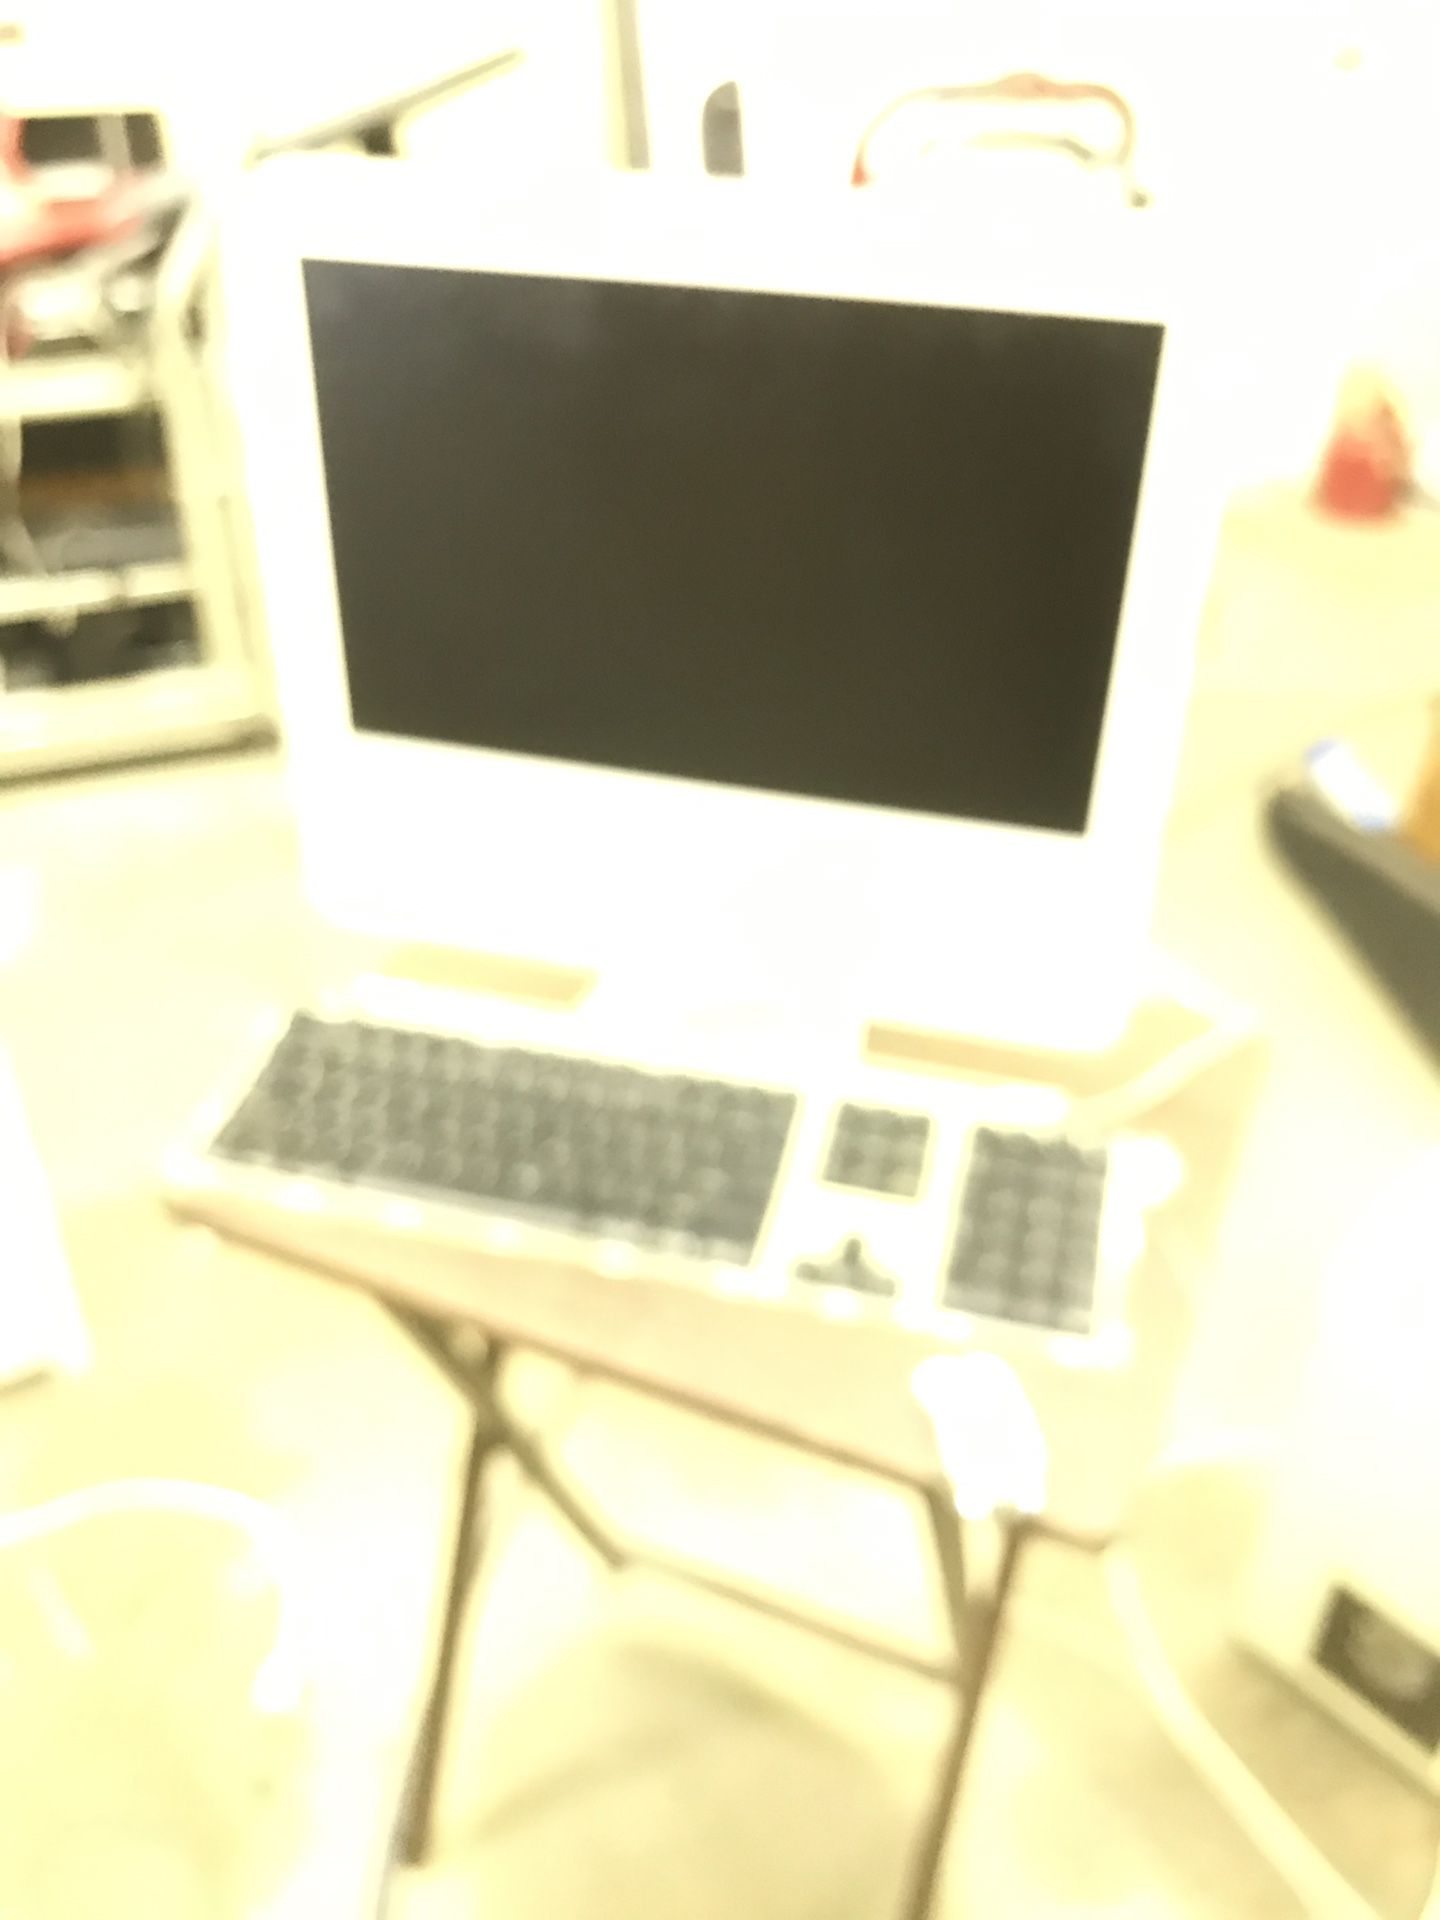 iMac 160